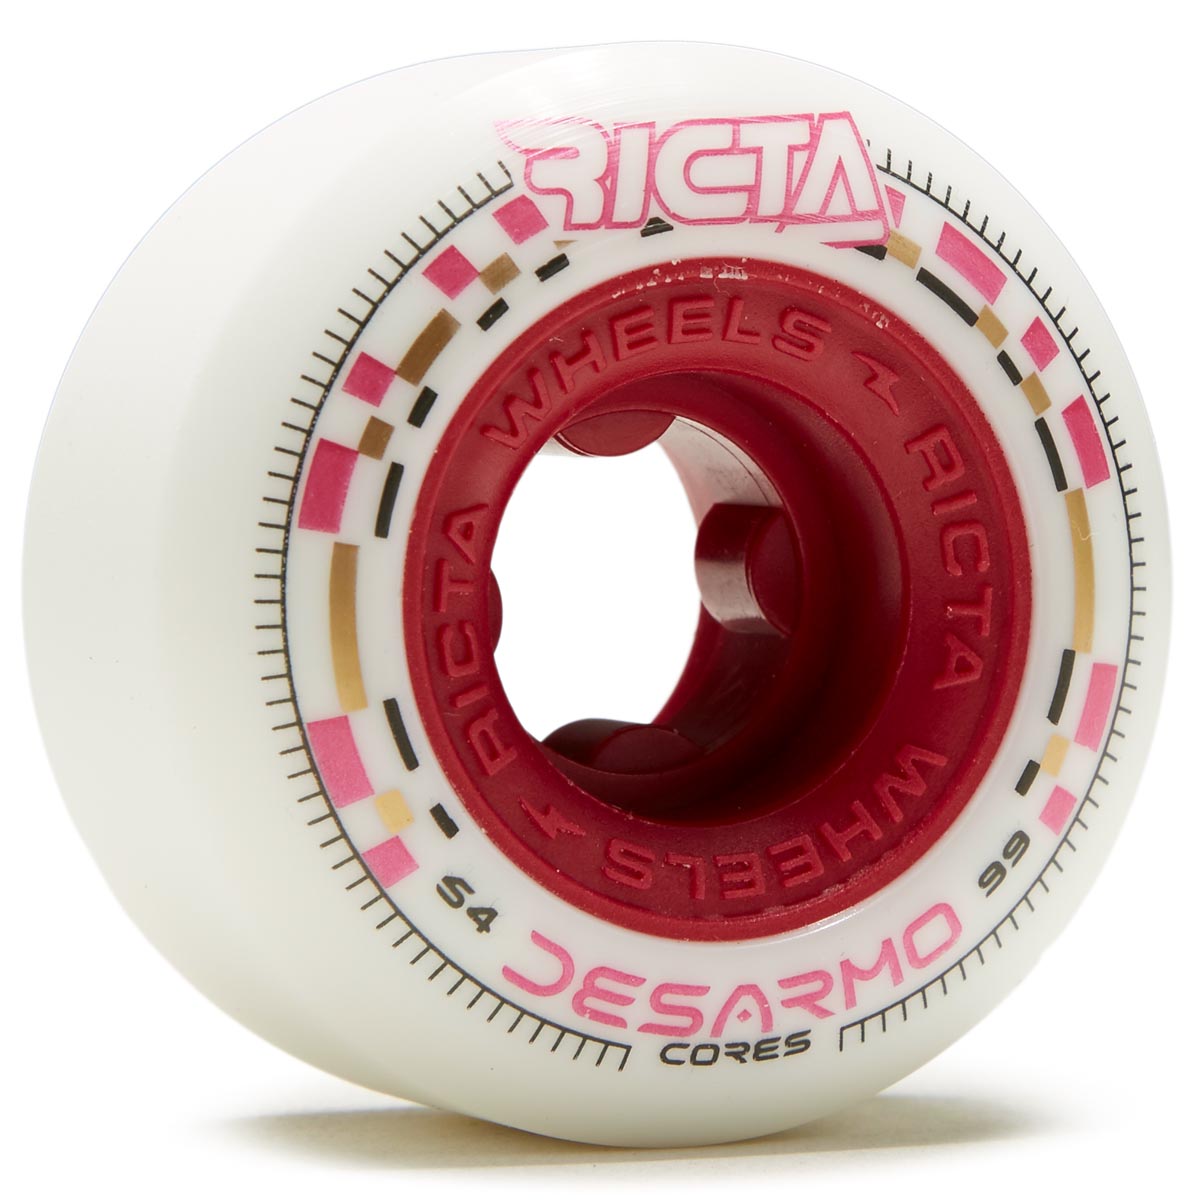 Ricta Desarmo Cores Round 99a Skateboard Wheels - White - 54mm image 1